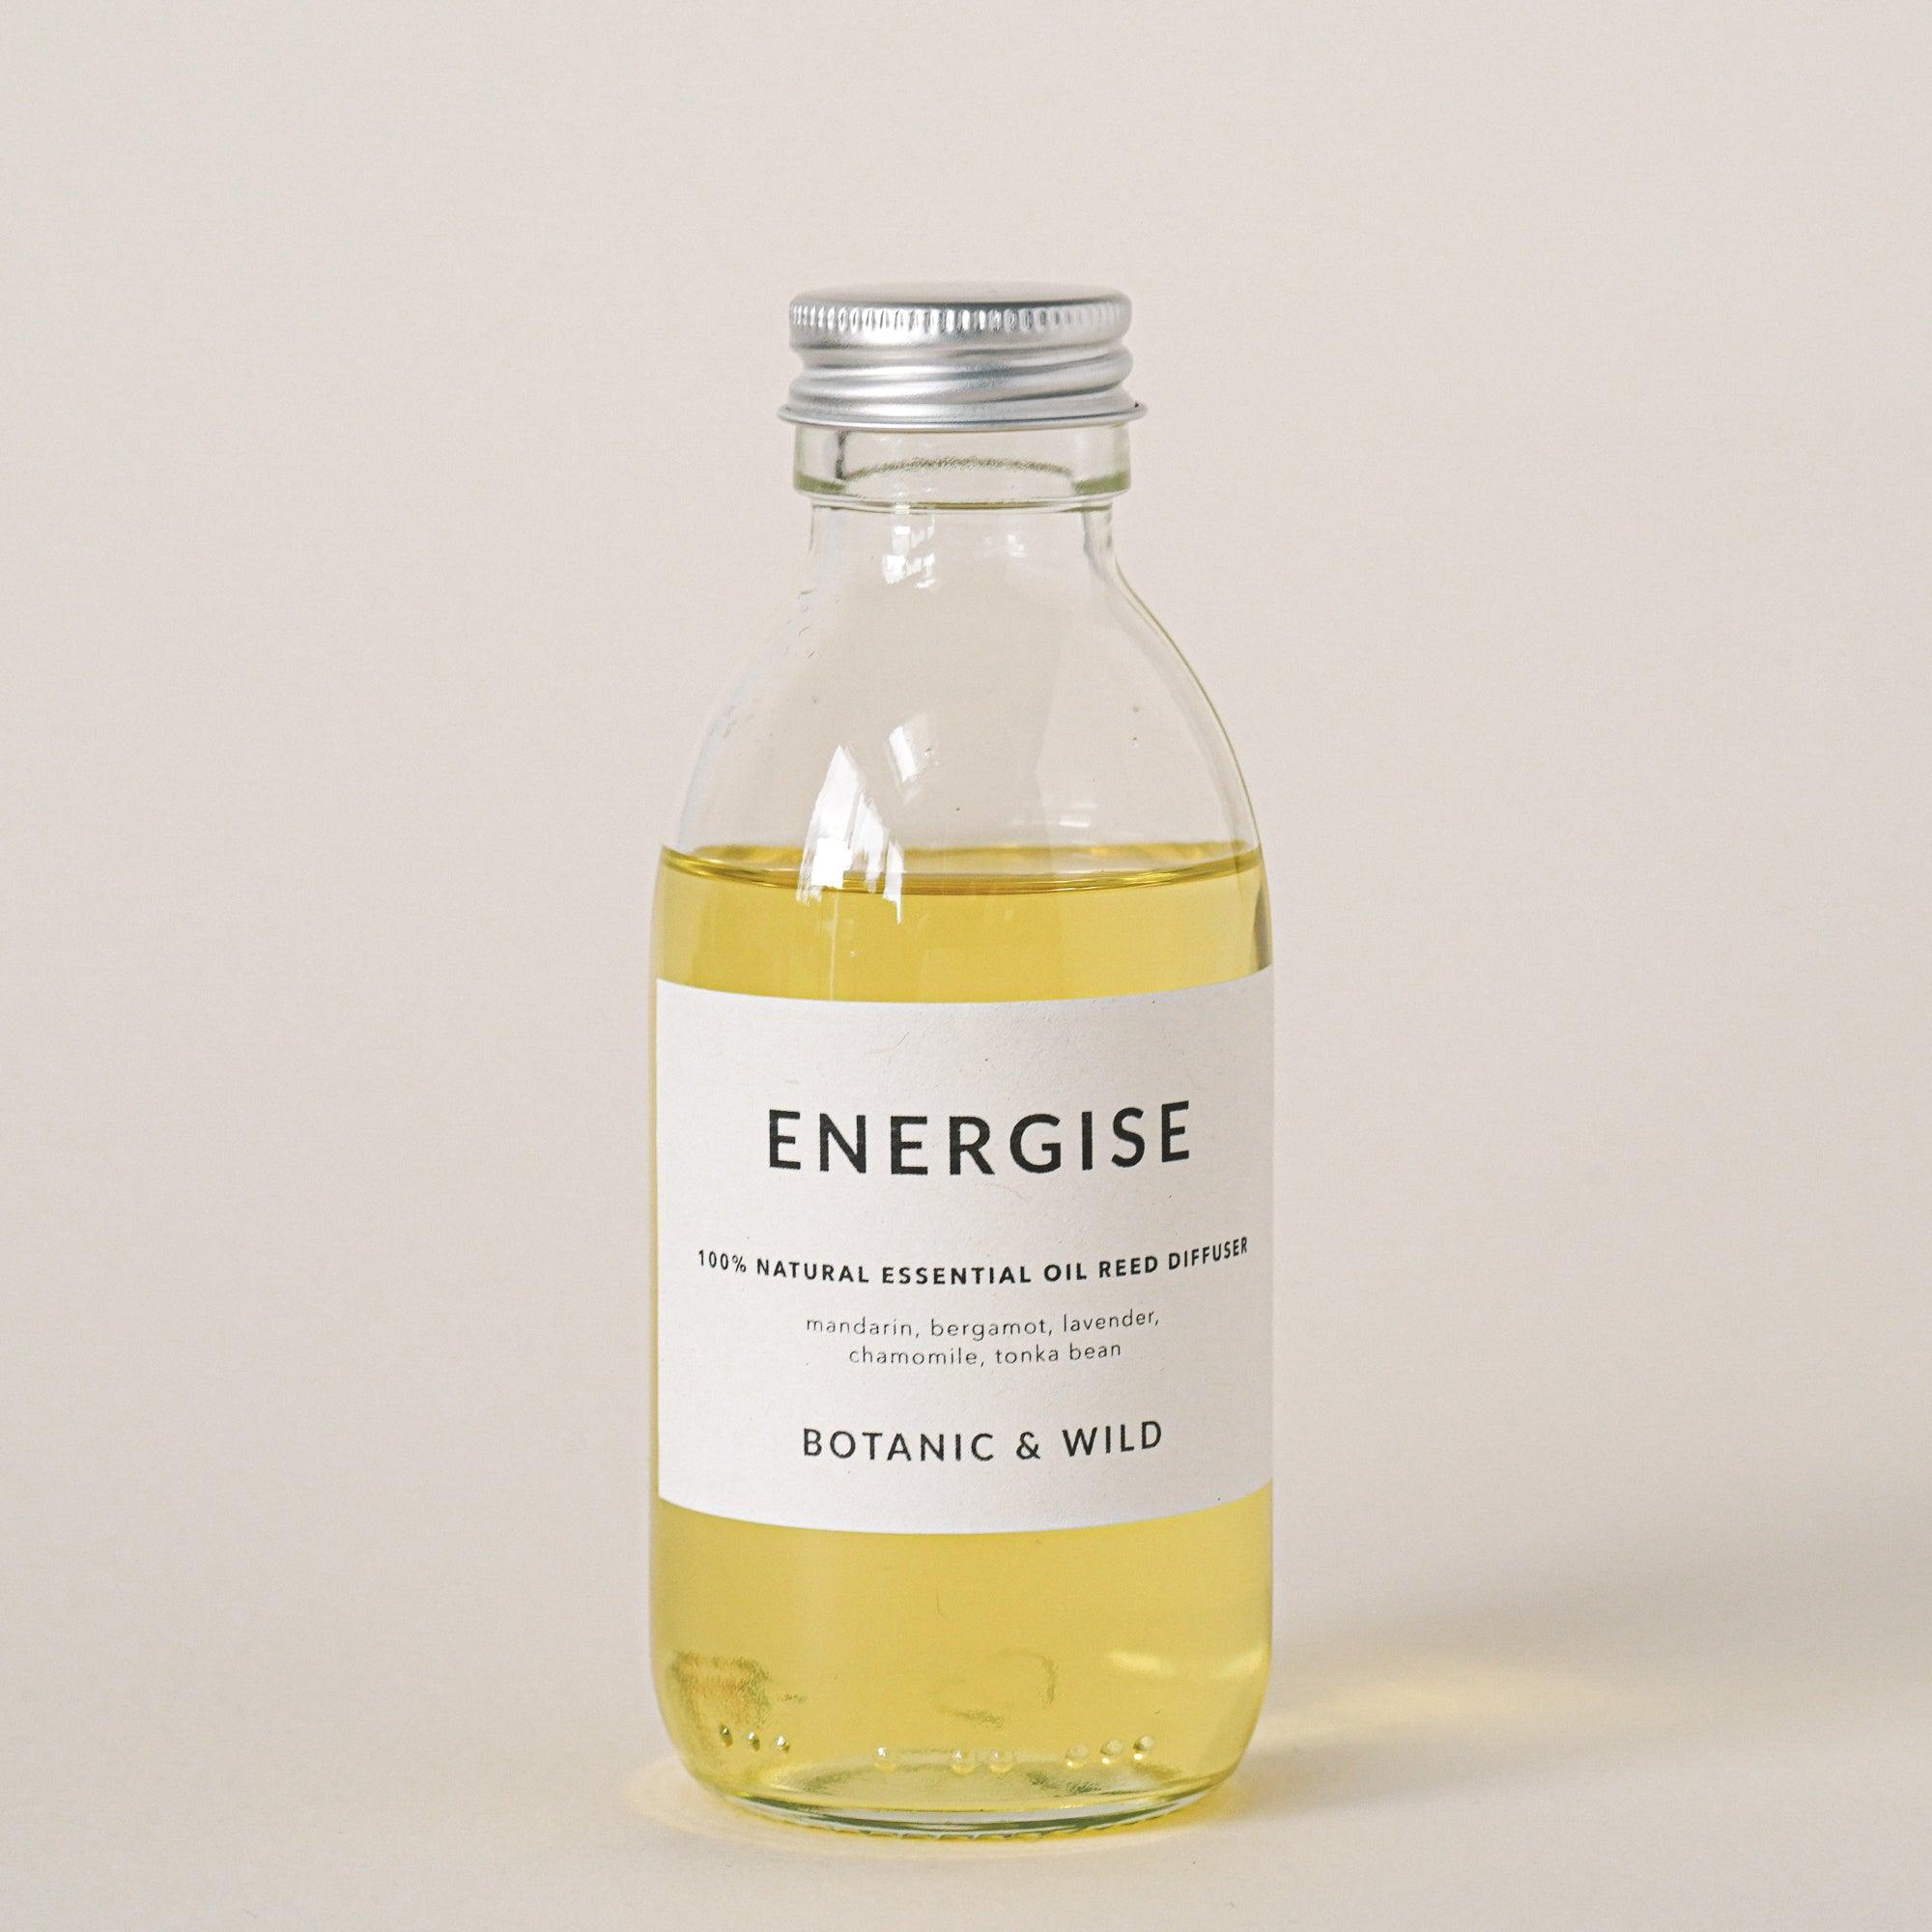 ENERGISE Essential Oil Reed Diffuser - Botanic & Wild